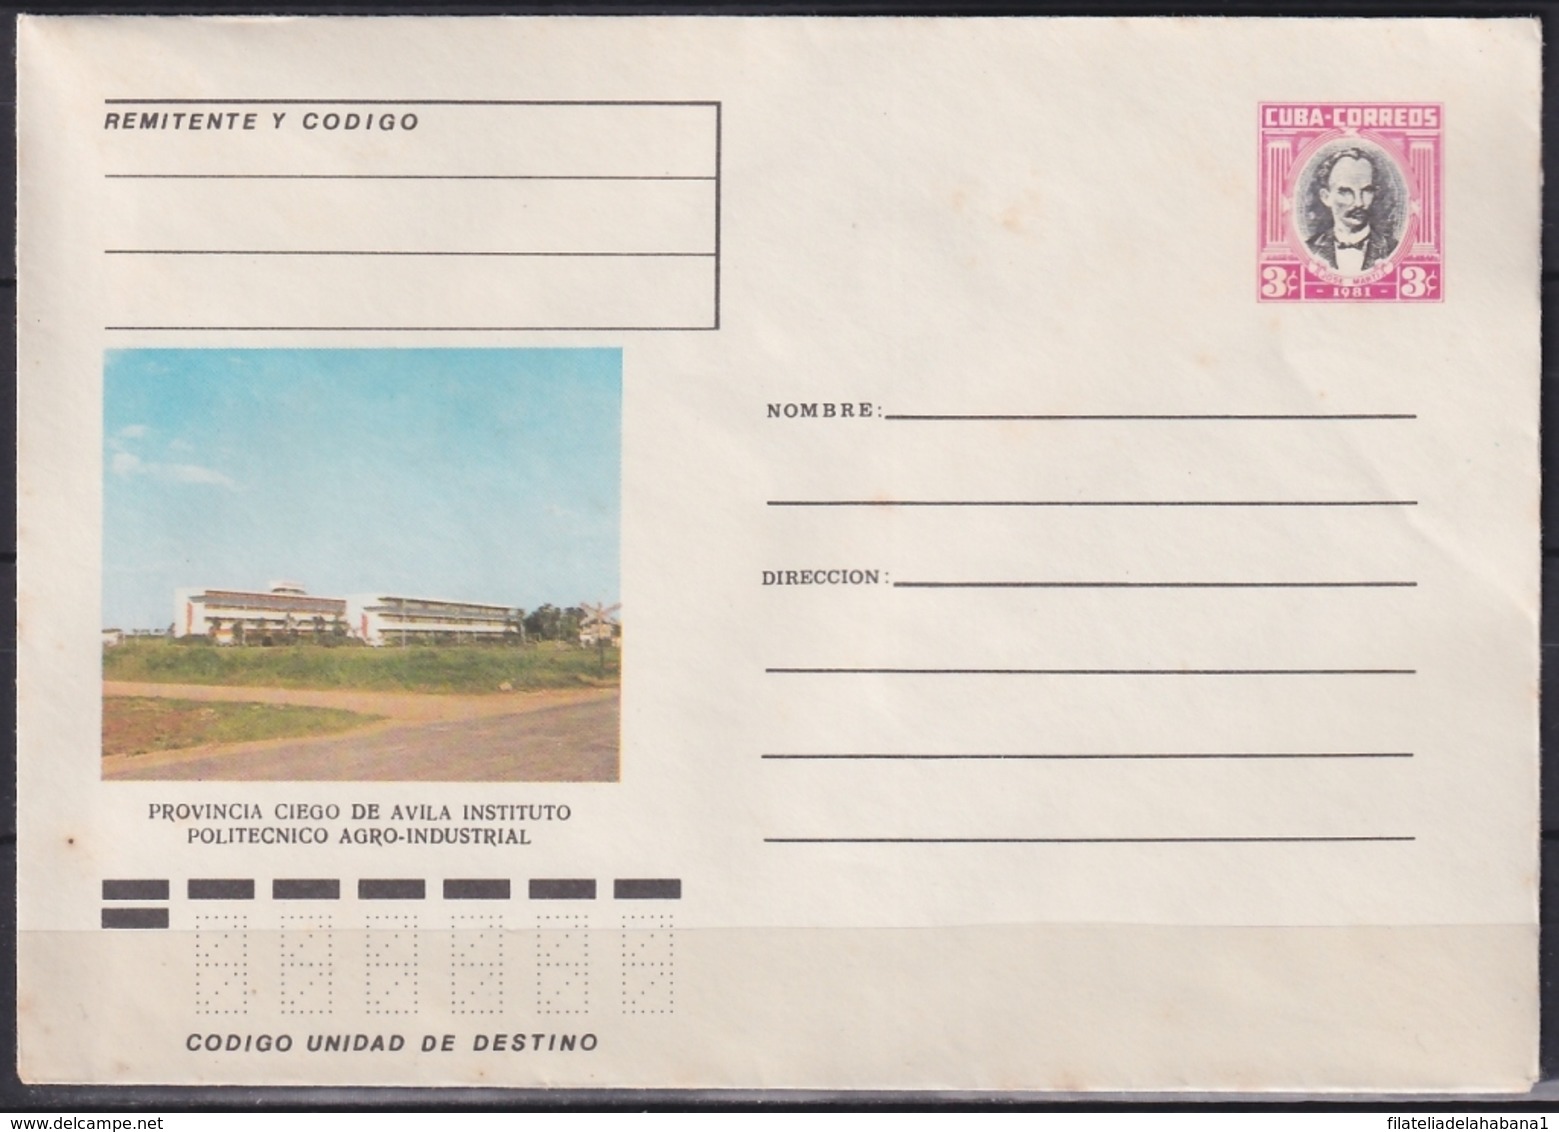 1981-EP-136 CUBA 1981 3c POSTAL STATIONERY COVER. CIEGO DE AVILA, INSTITUTO POLITECNICO AGRO-INDUSTRIAL - Lettres & Documents